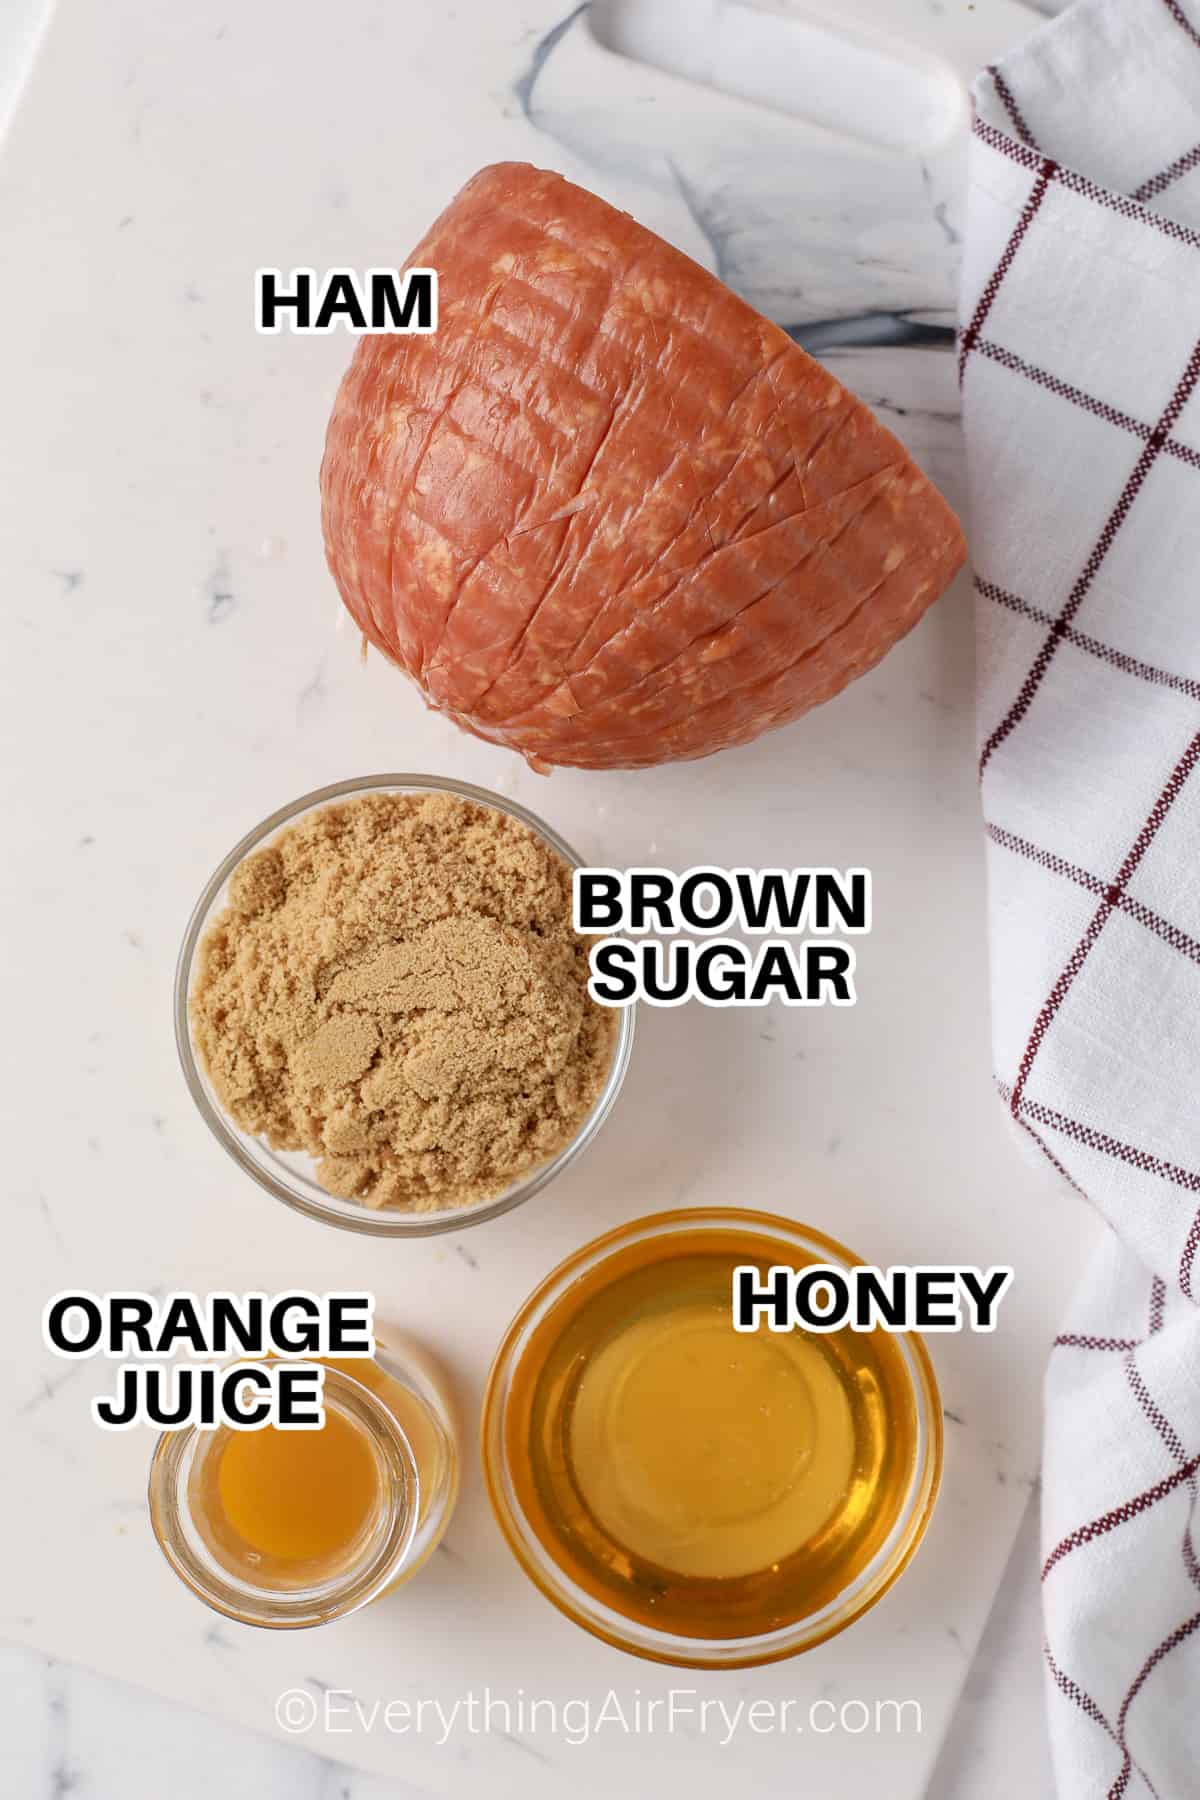 Ingredients to make Air Fryer Glazed Ham labeled: Ham, honey, brown sugar, and orange juice. 